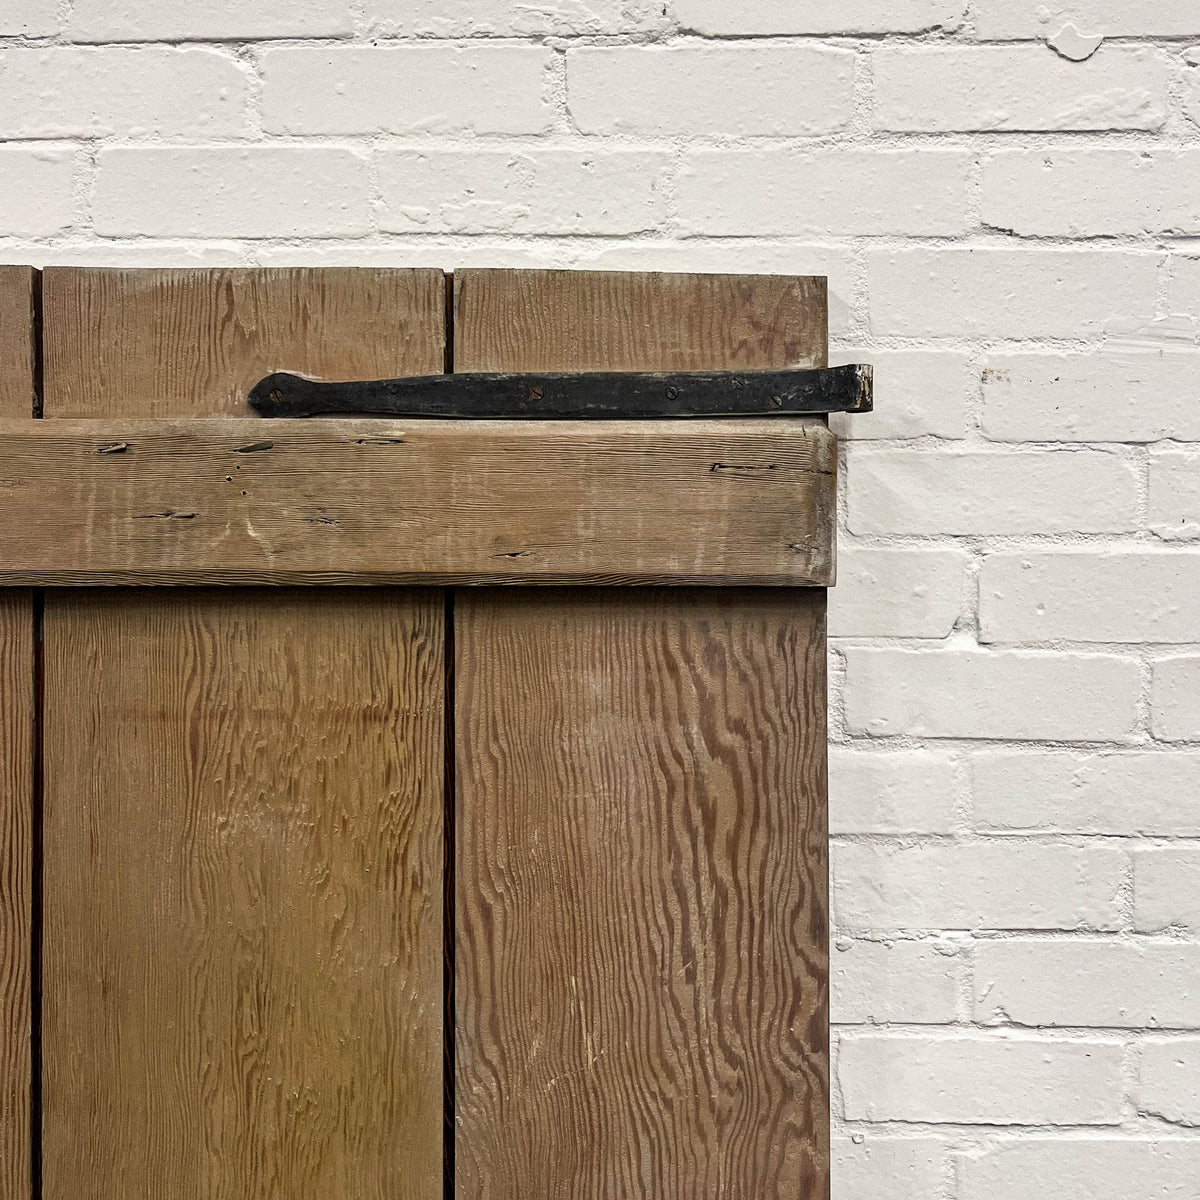 Antique Victorian Pine Latch Door - 186cm x 85cm | The Architectural Forum